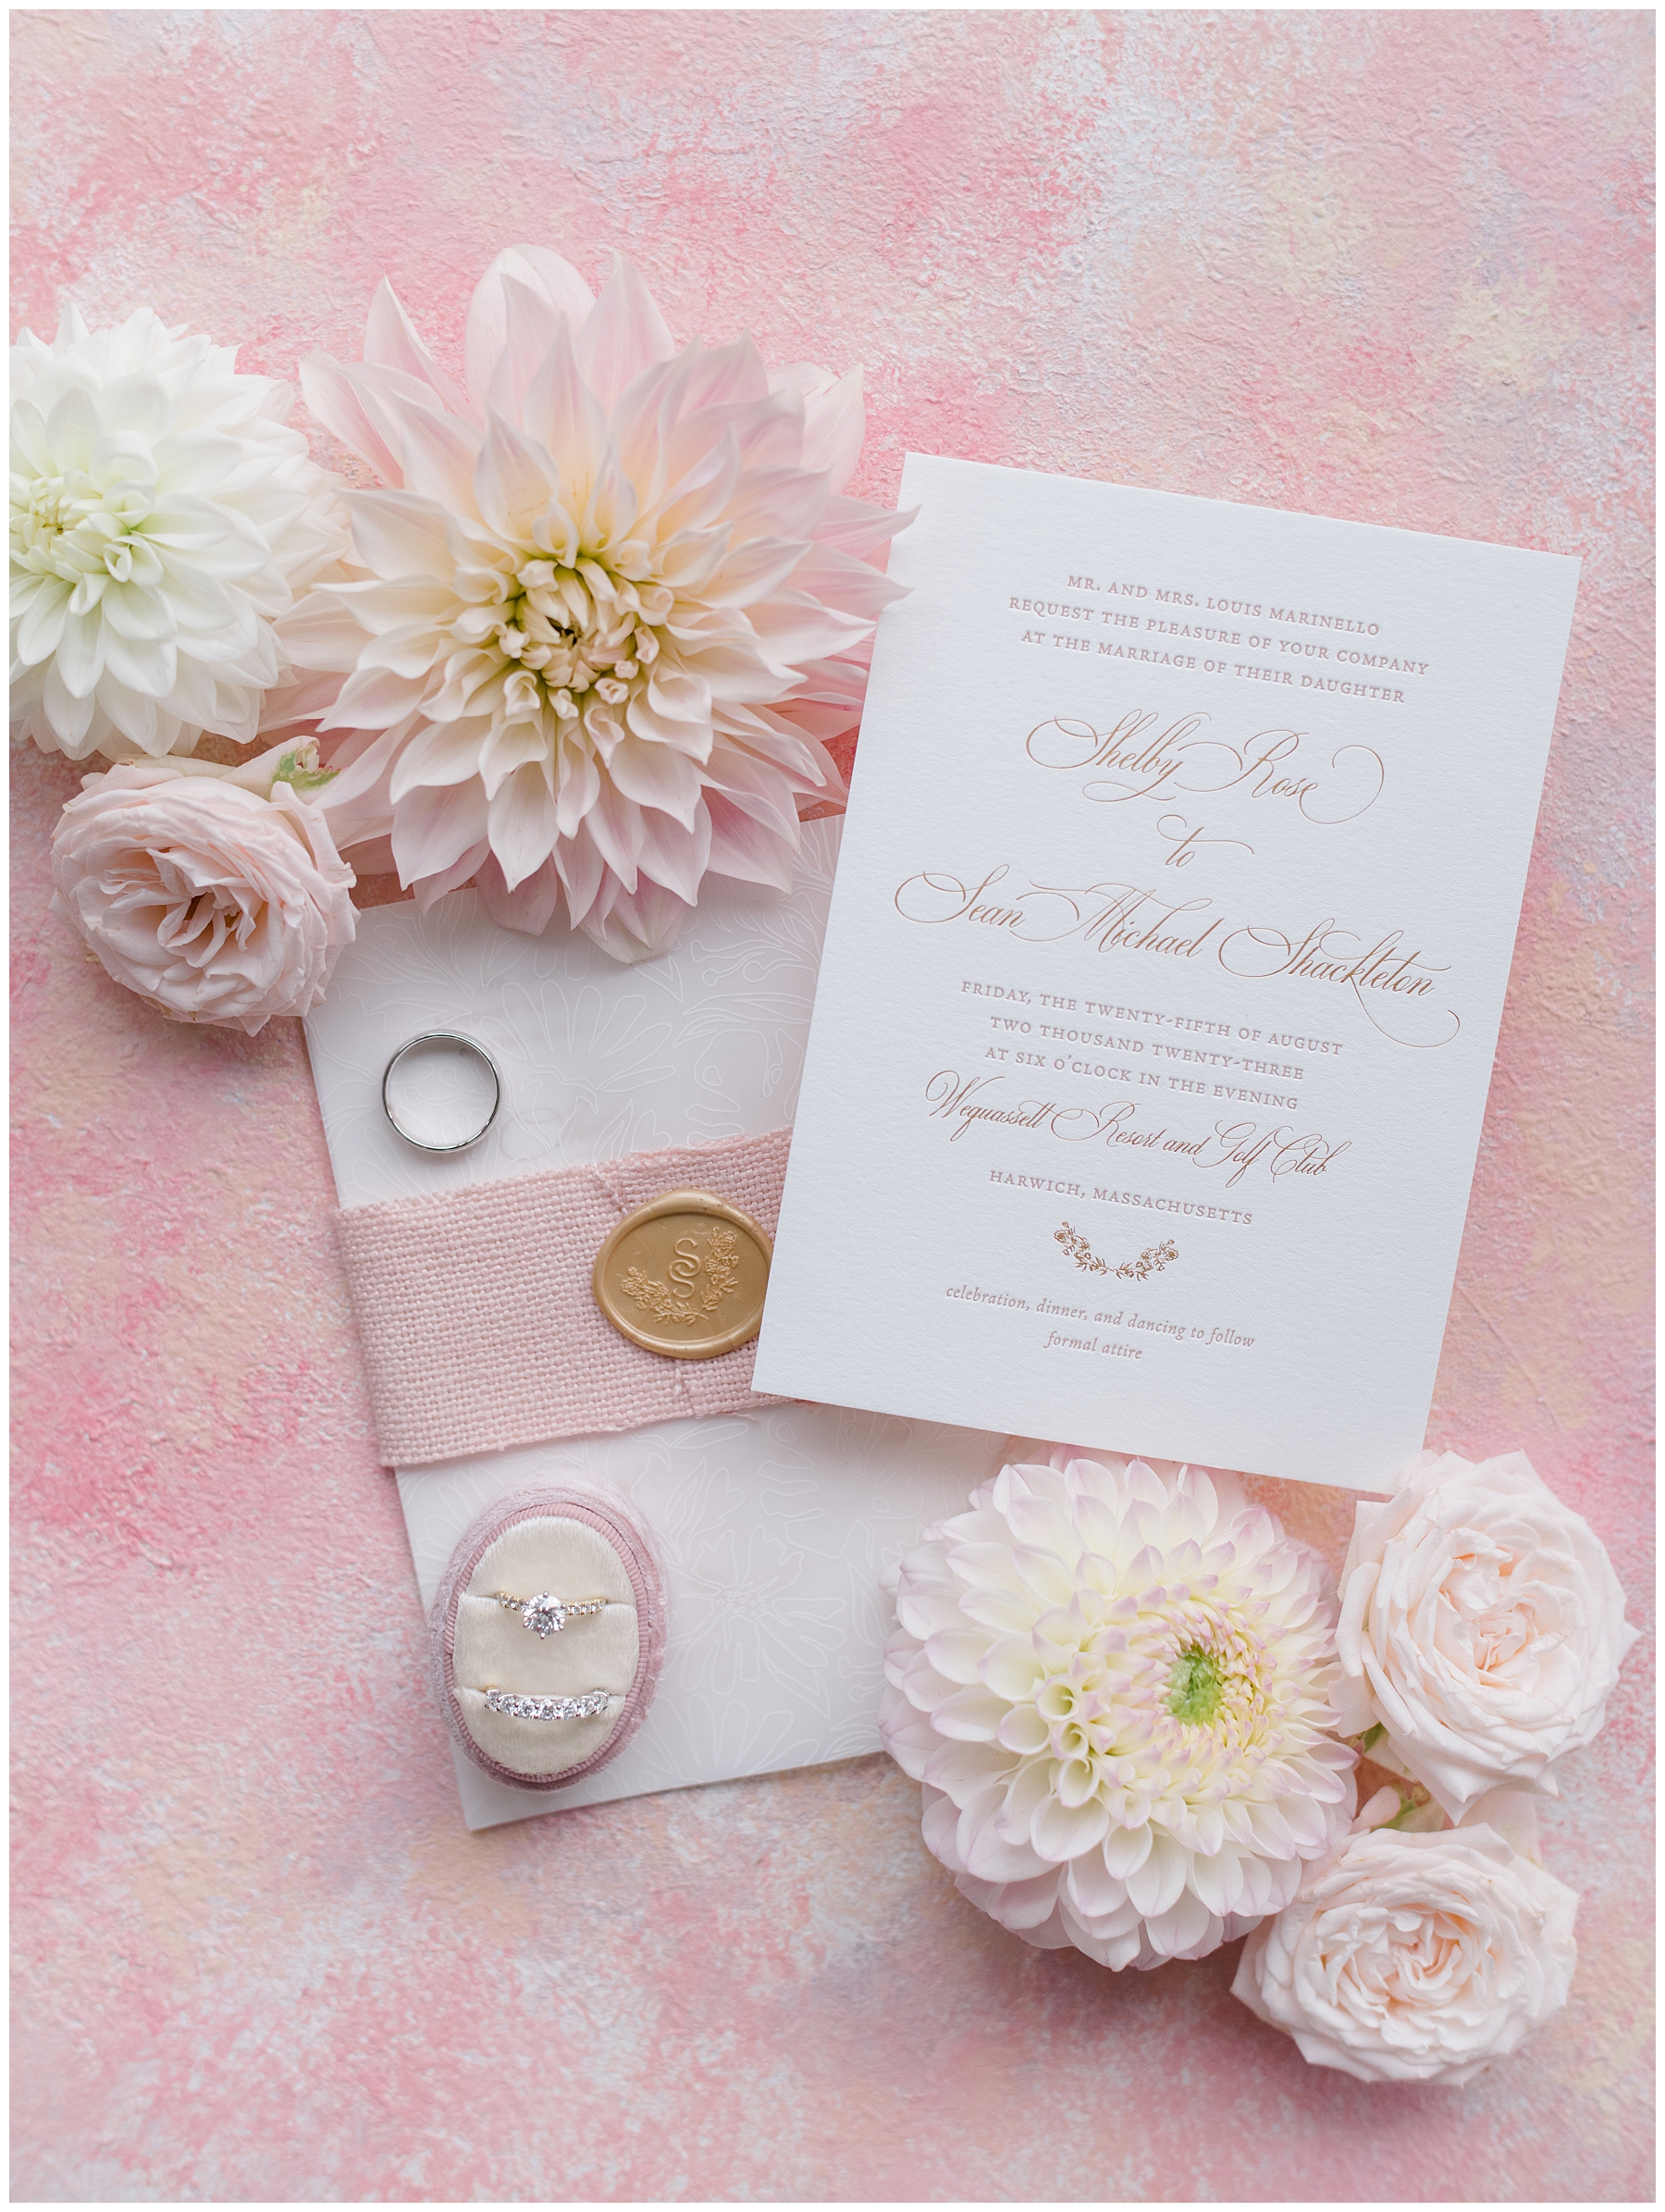 Wedding invitations from Luxury Cape Cod Wedding at the Wequassett Resort